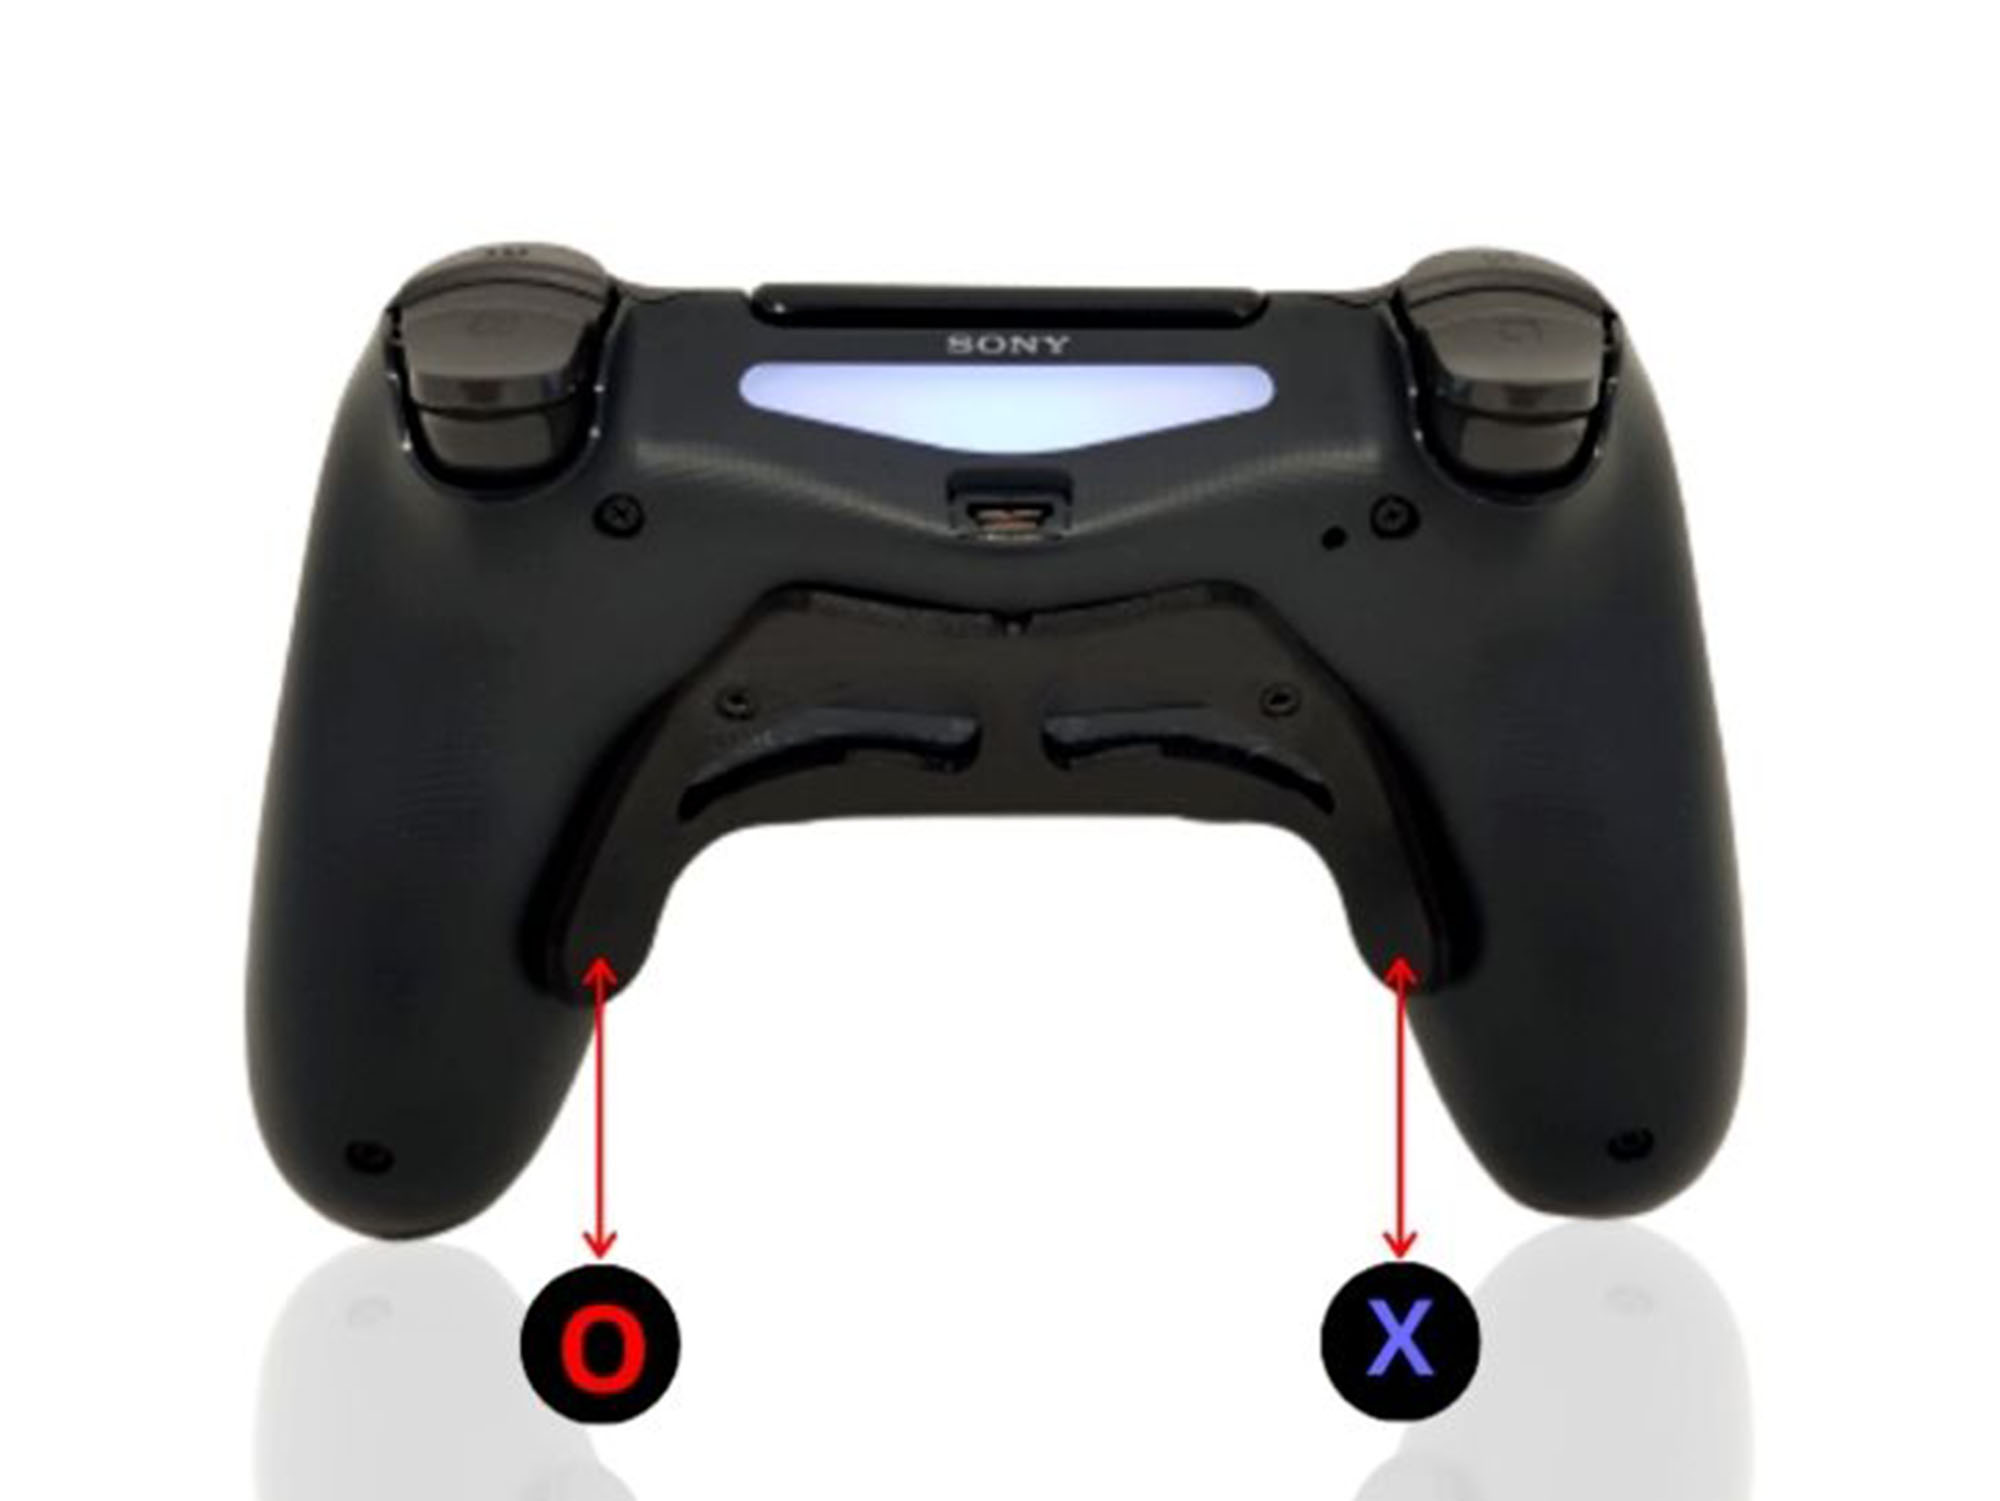 LUXCONTROLLER PS4 Custom Controller mit BlueRok, schwarz Wireless-Controller, 2 Paddles